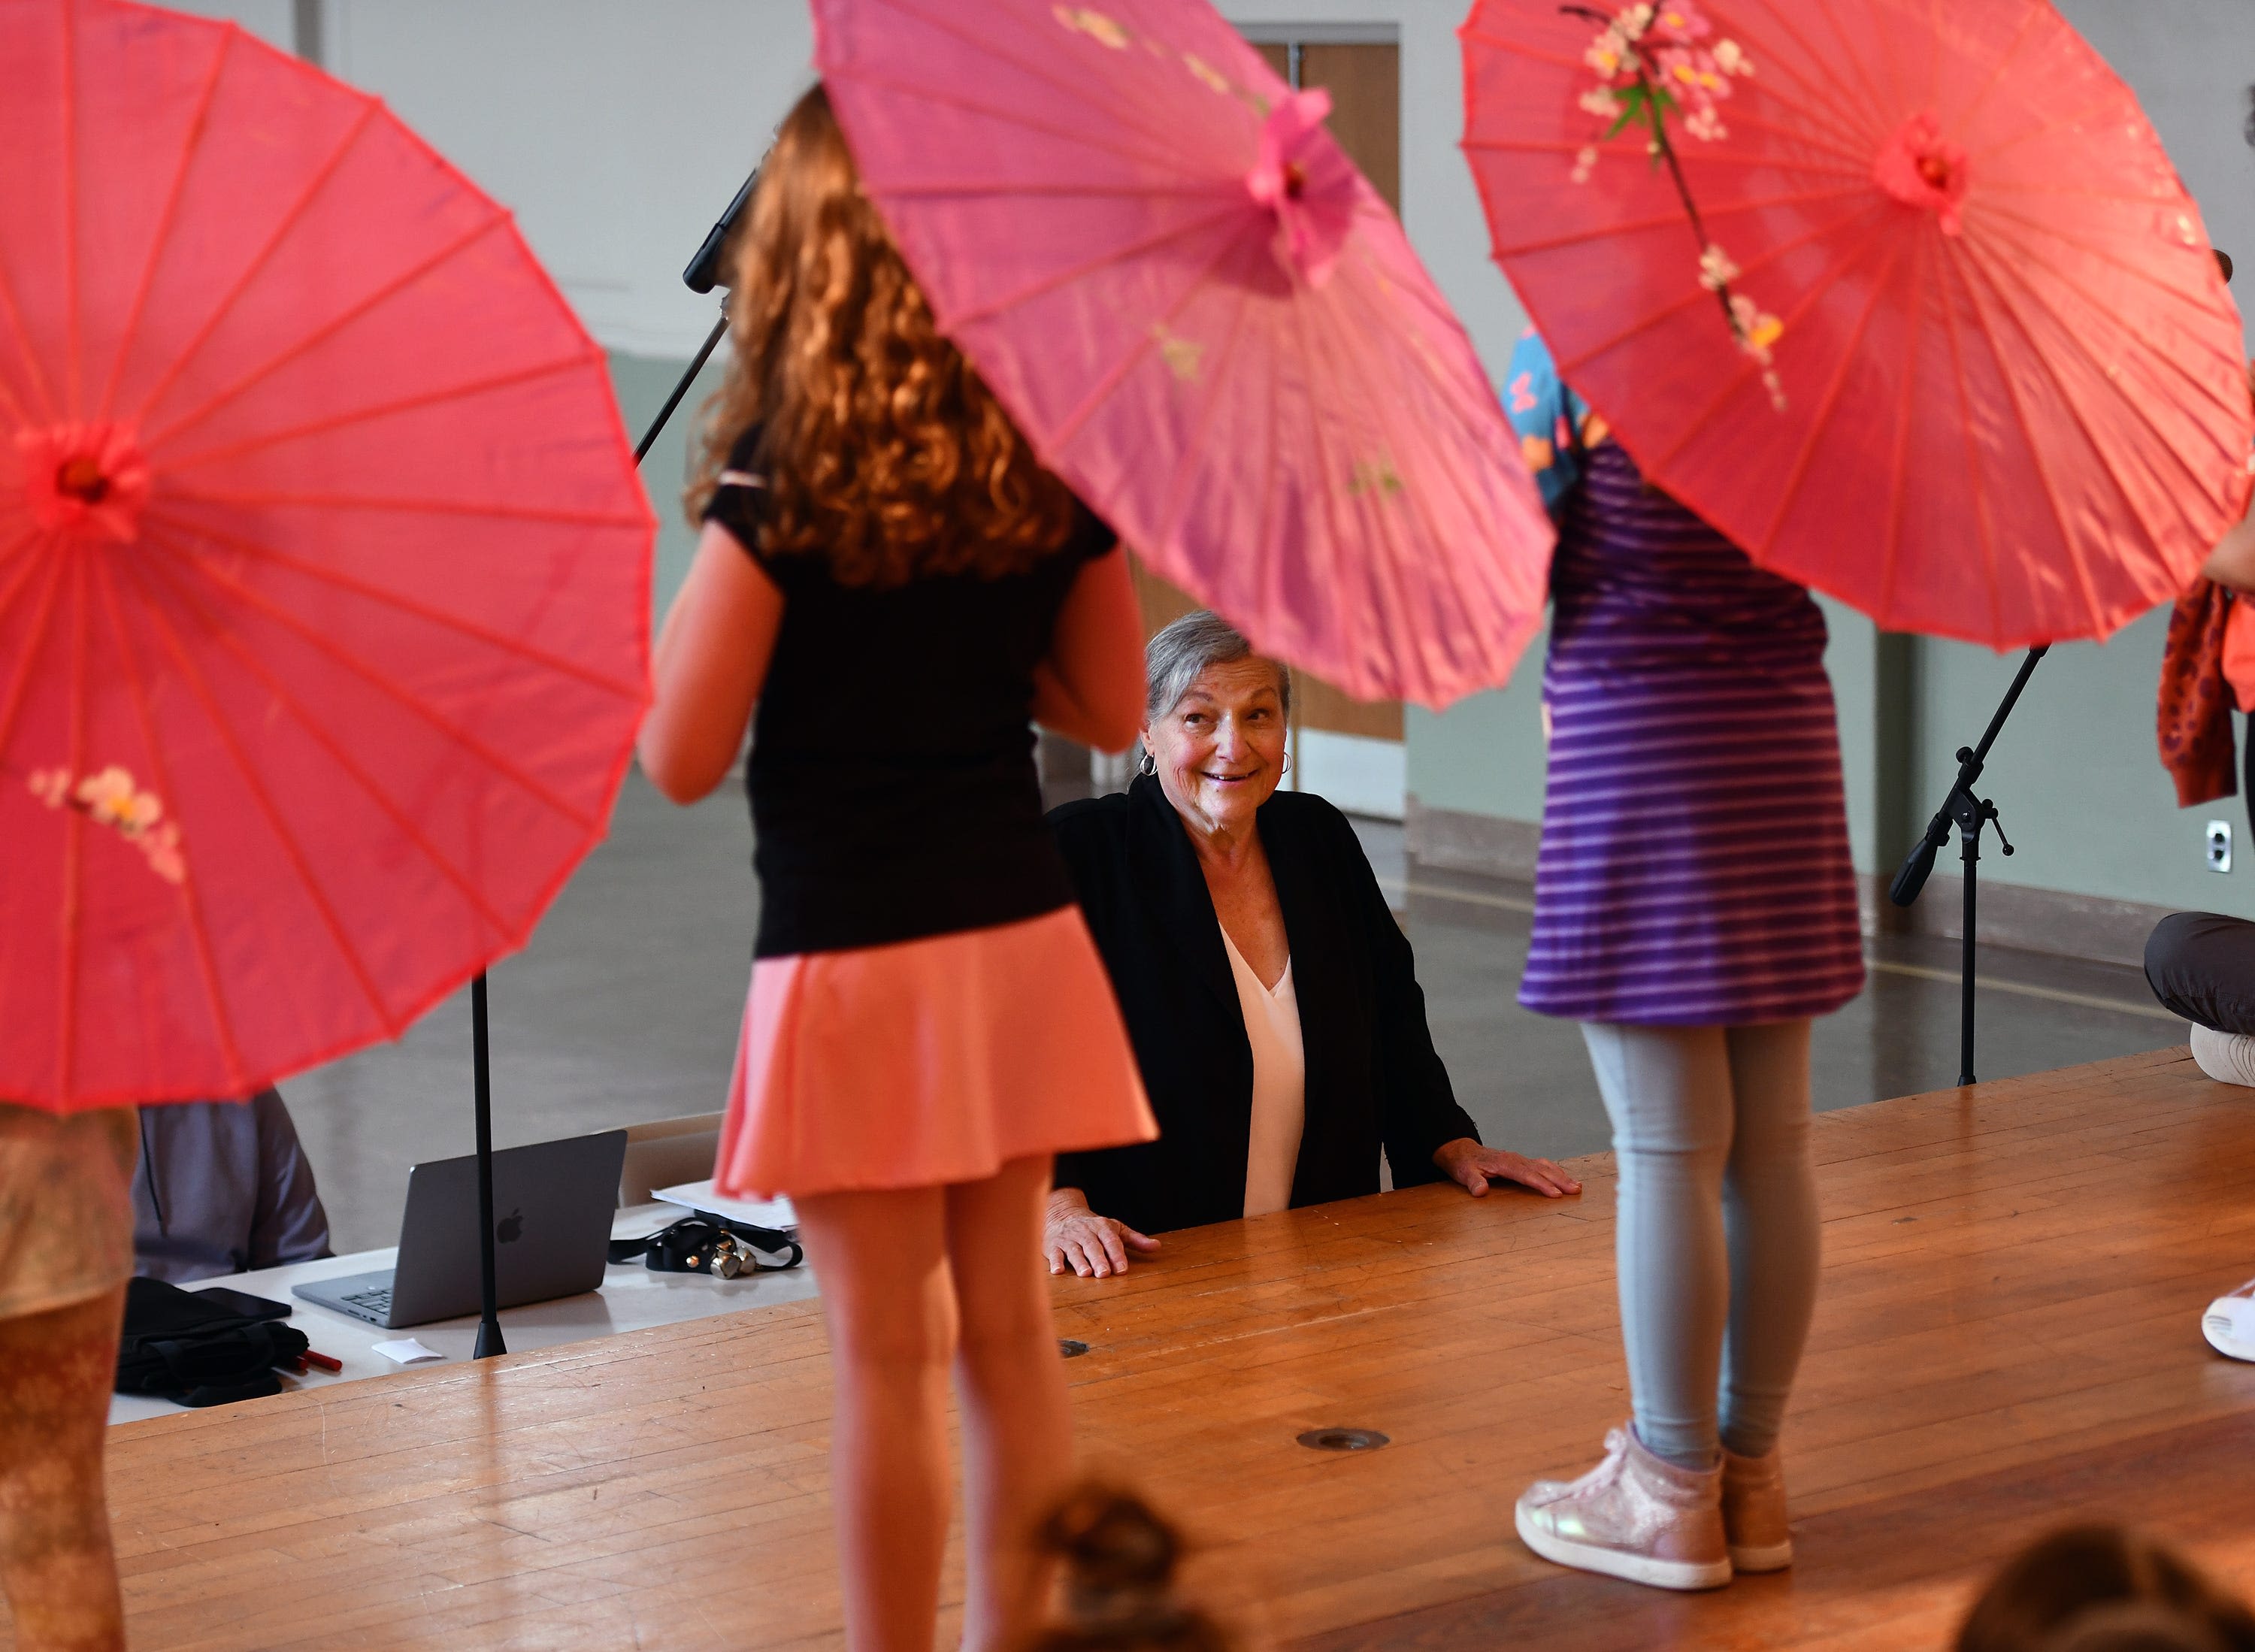 Dance studio founder Jo Ann Warren lends a hand at grandson's school to direct show